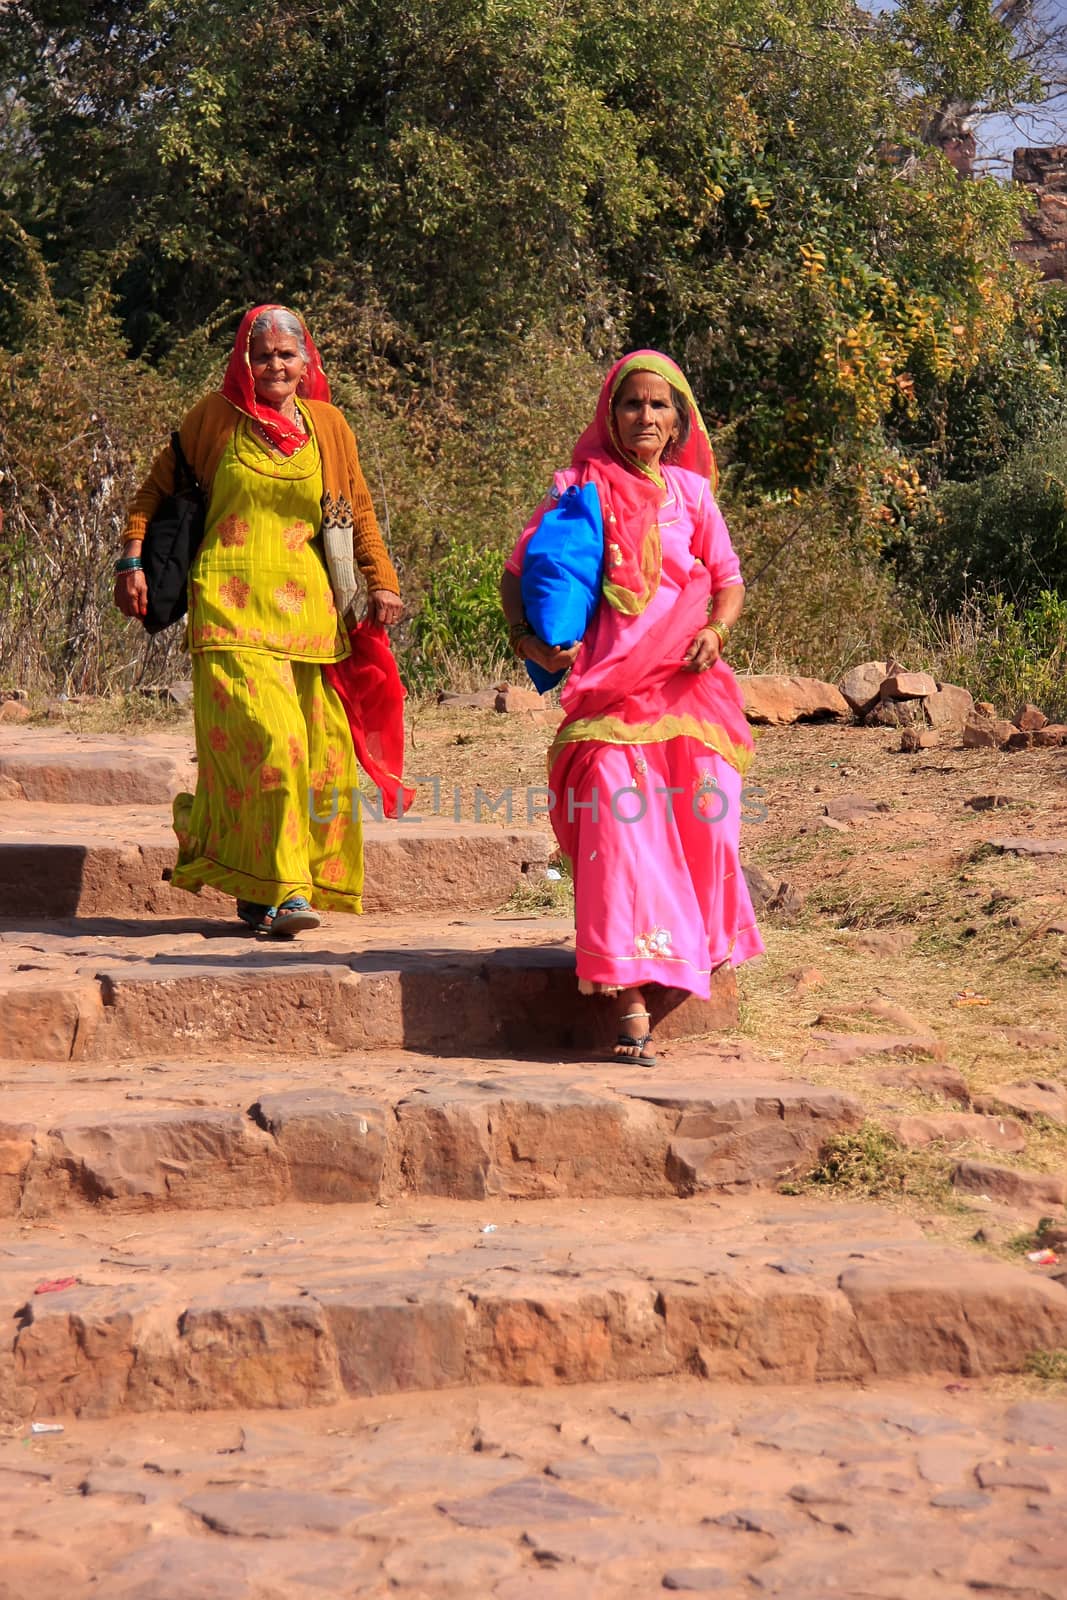 Indian women in colorful saris walking at Ranthambore Fort, Rajasthan, India